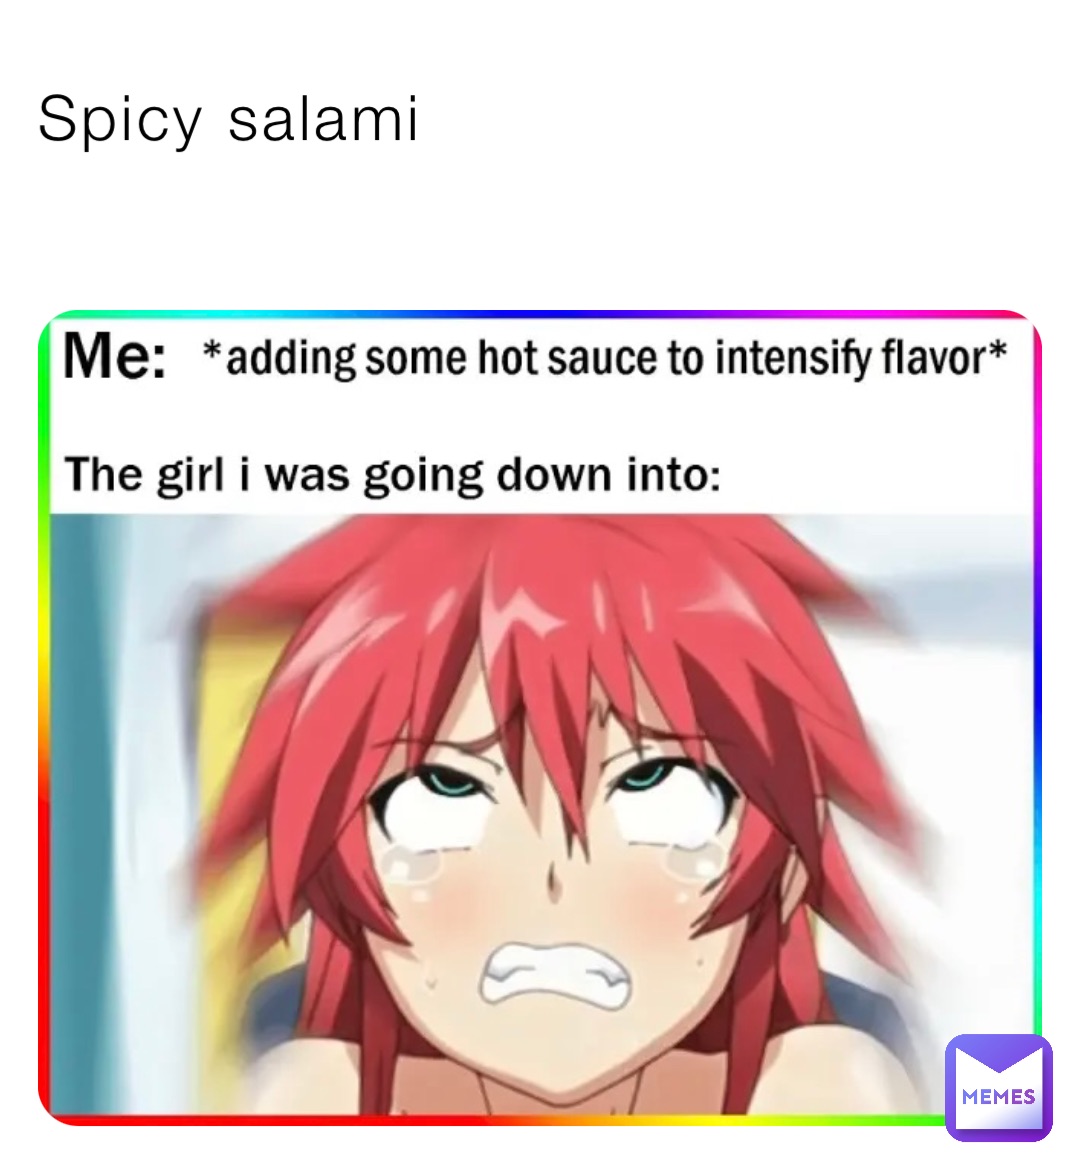 Spicy salami